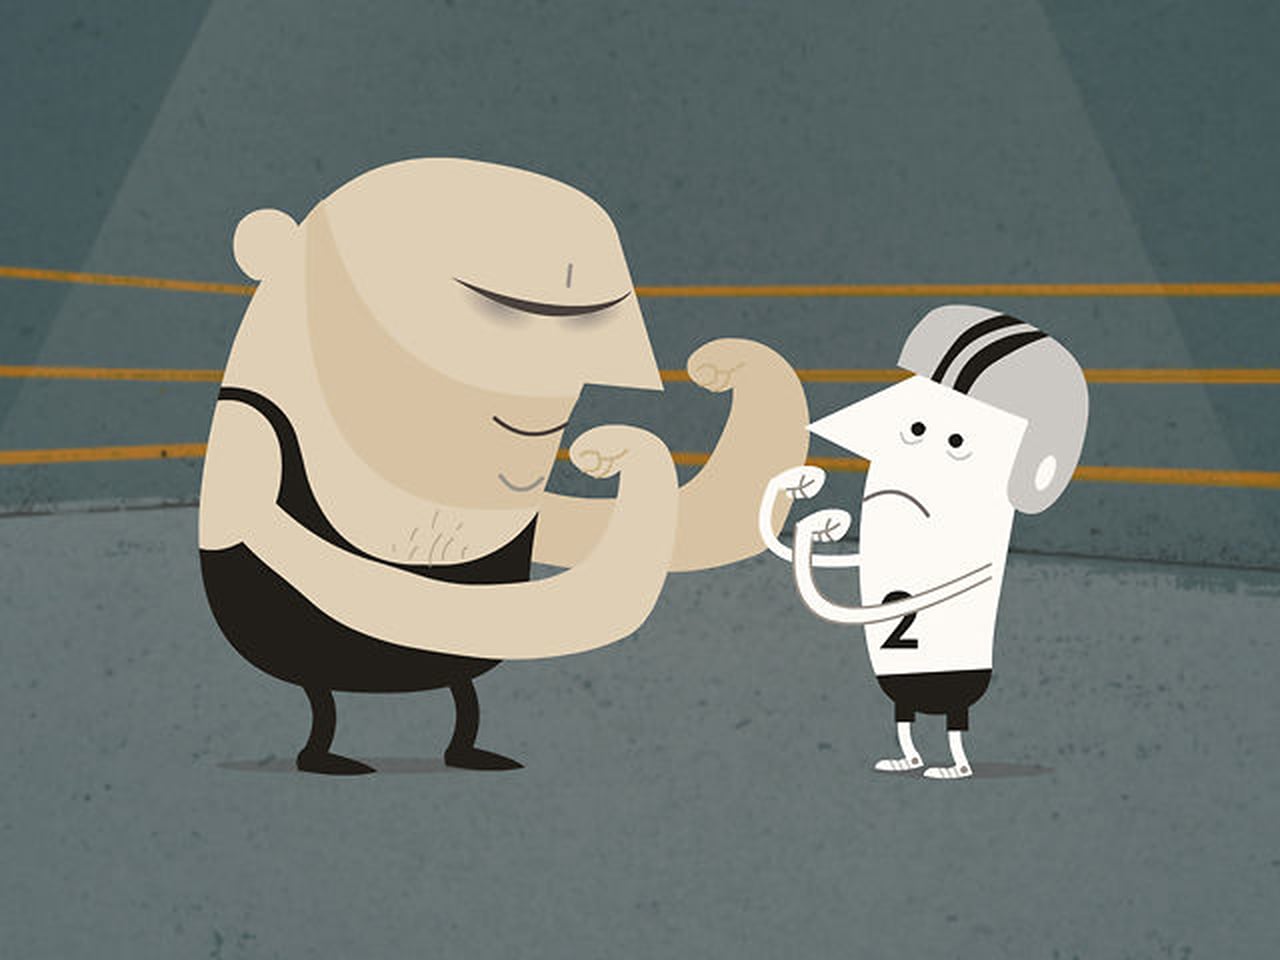 Learn Self Defense by Chris Harding | Animated Short Film